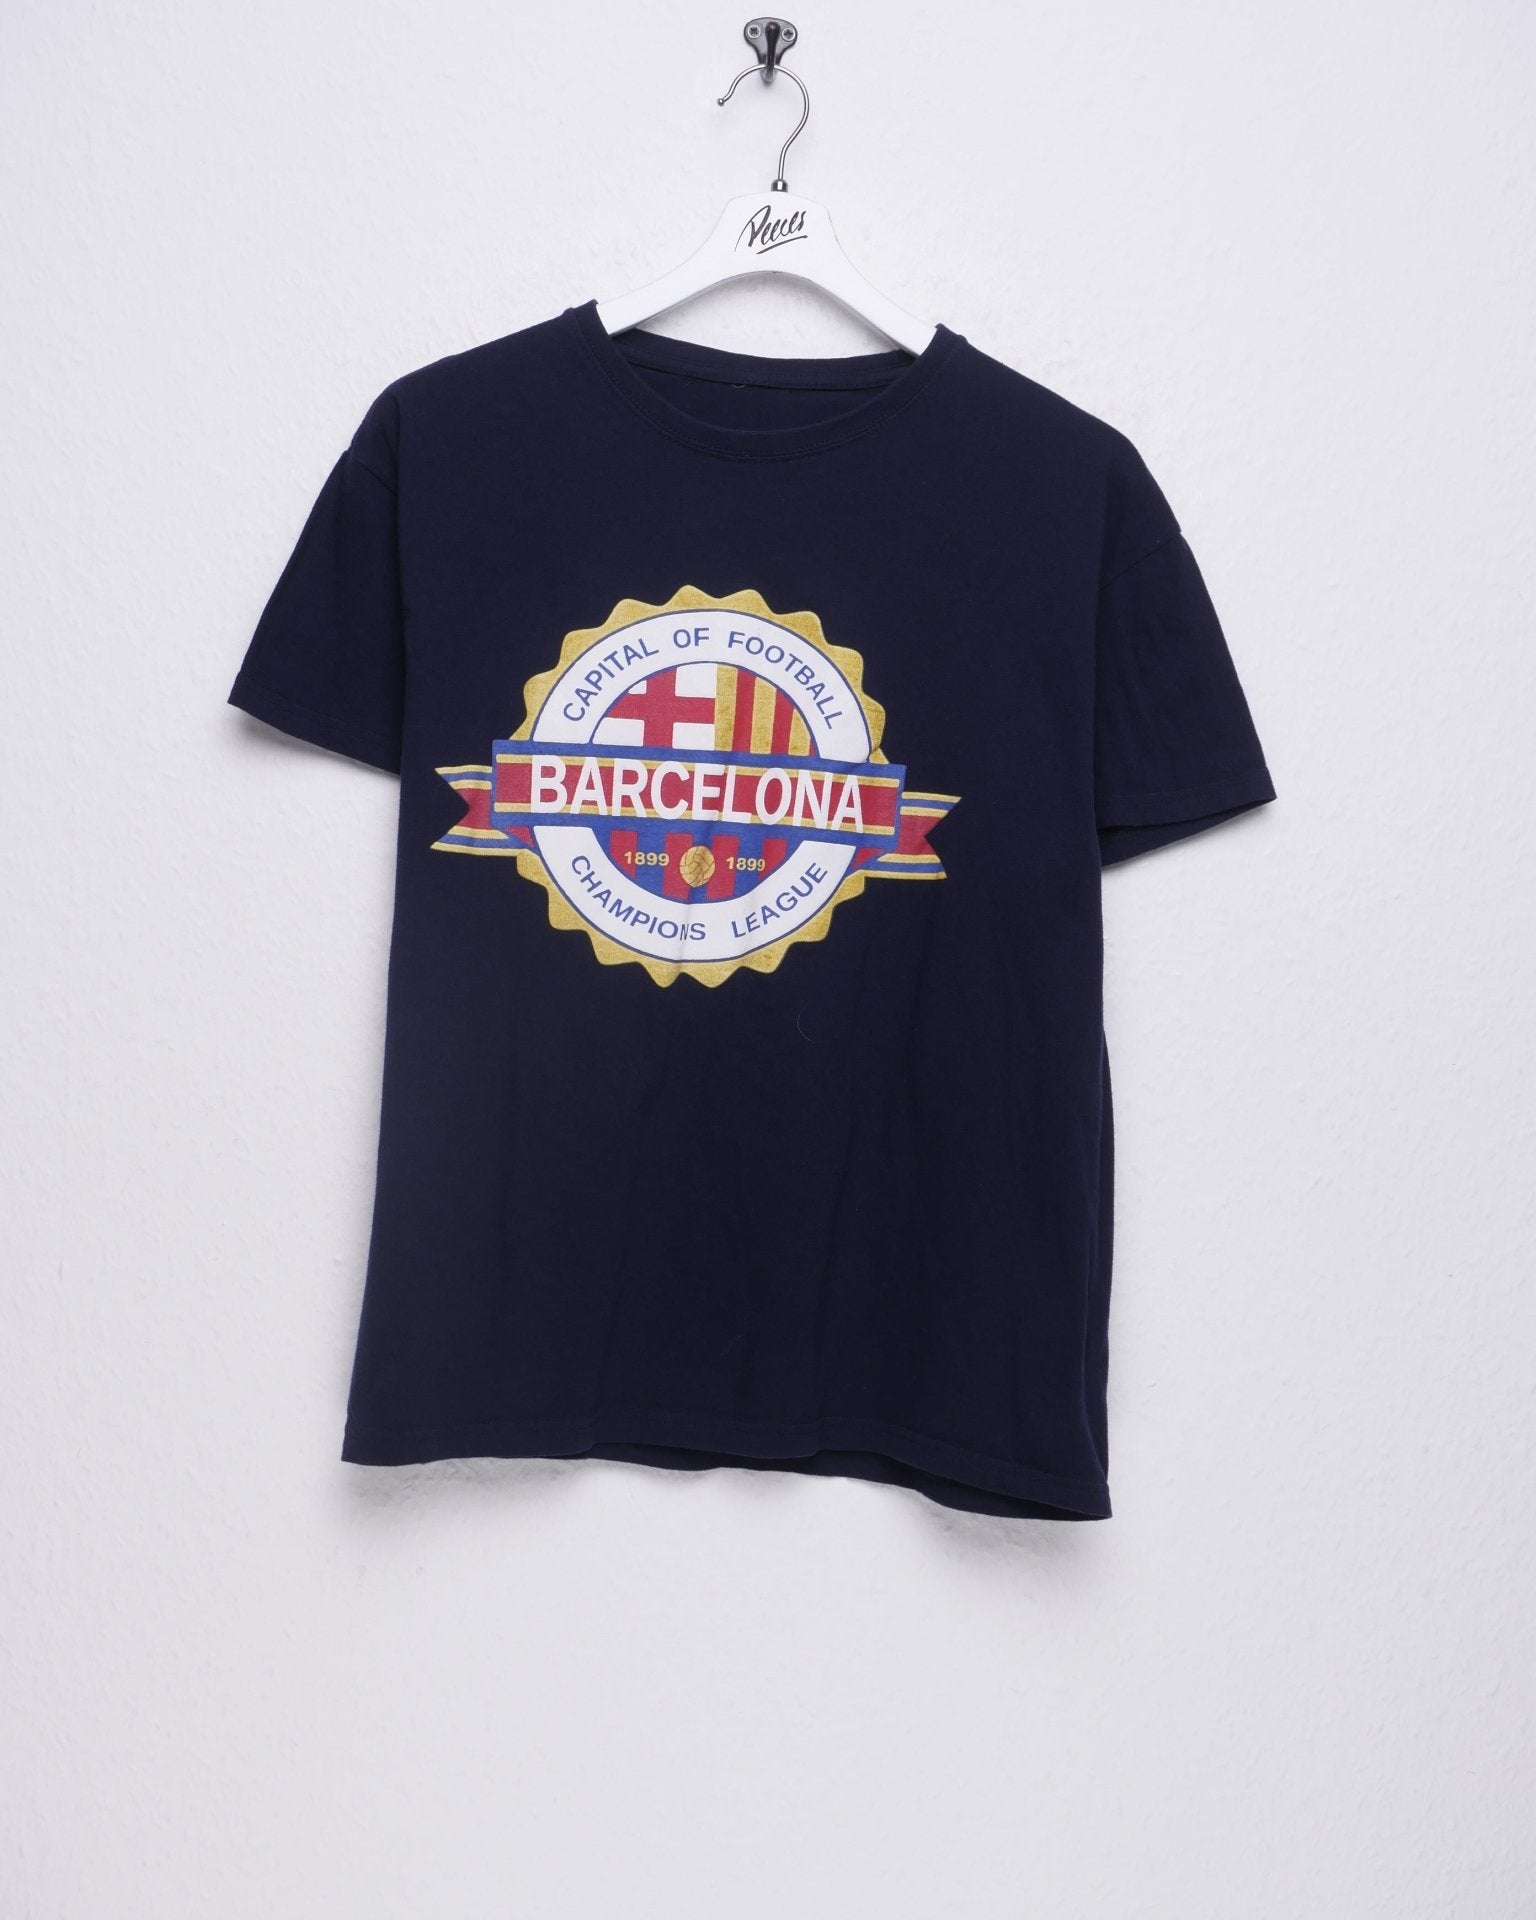 Barcelona printed Logo Vintage Shirt - Peeces